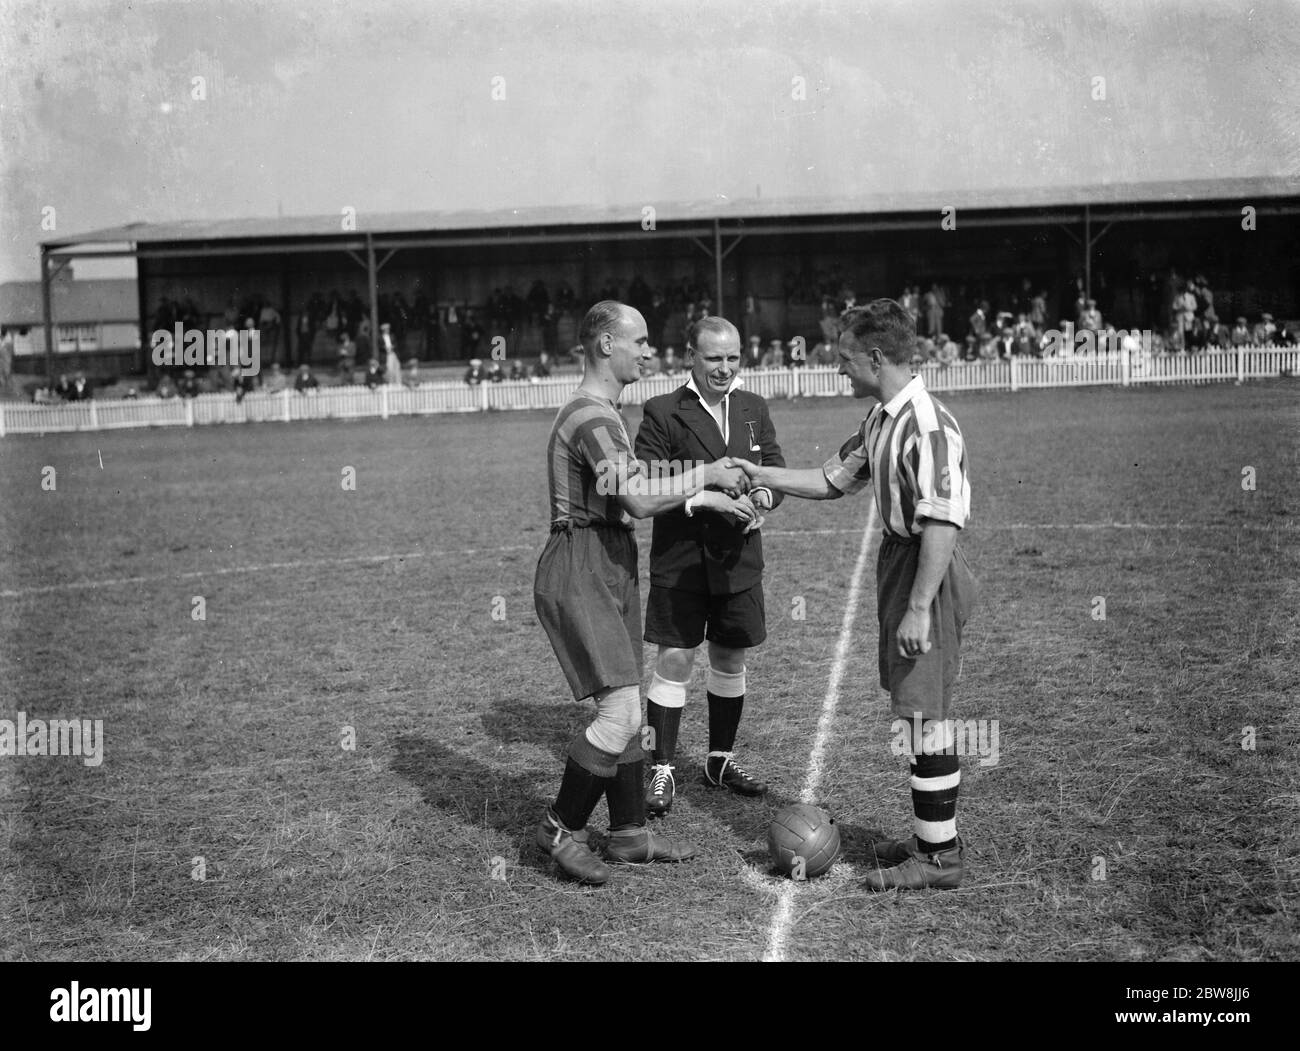 Dartford Reserves vs. Cray Wanderers - Kent League - 28/08/37 1937 Stockfoto